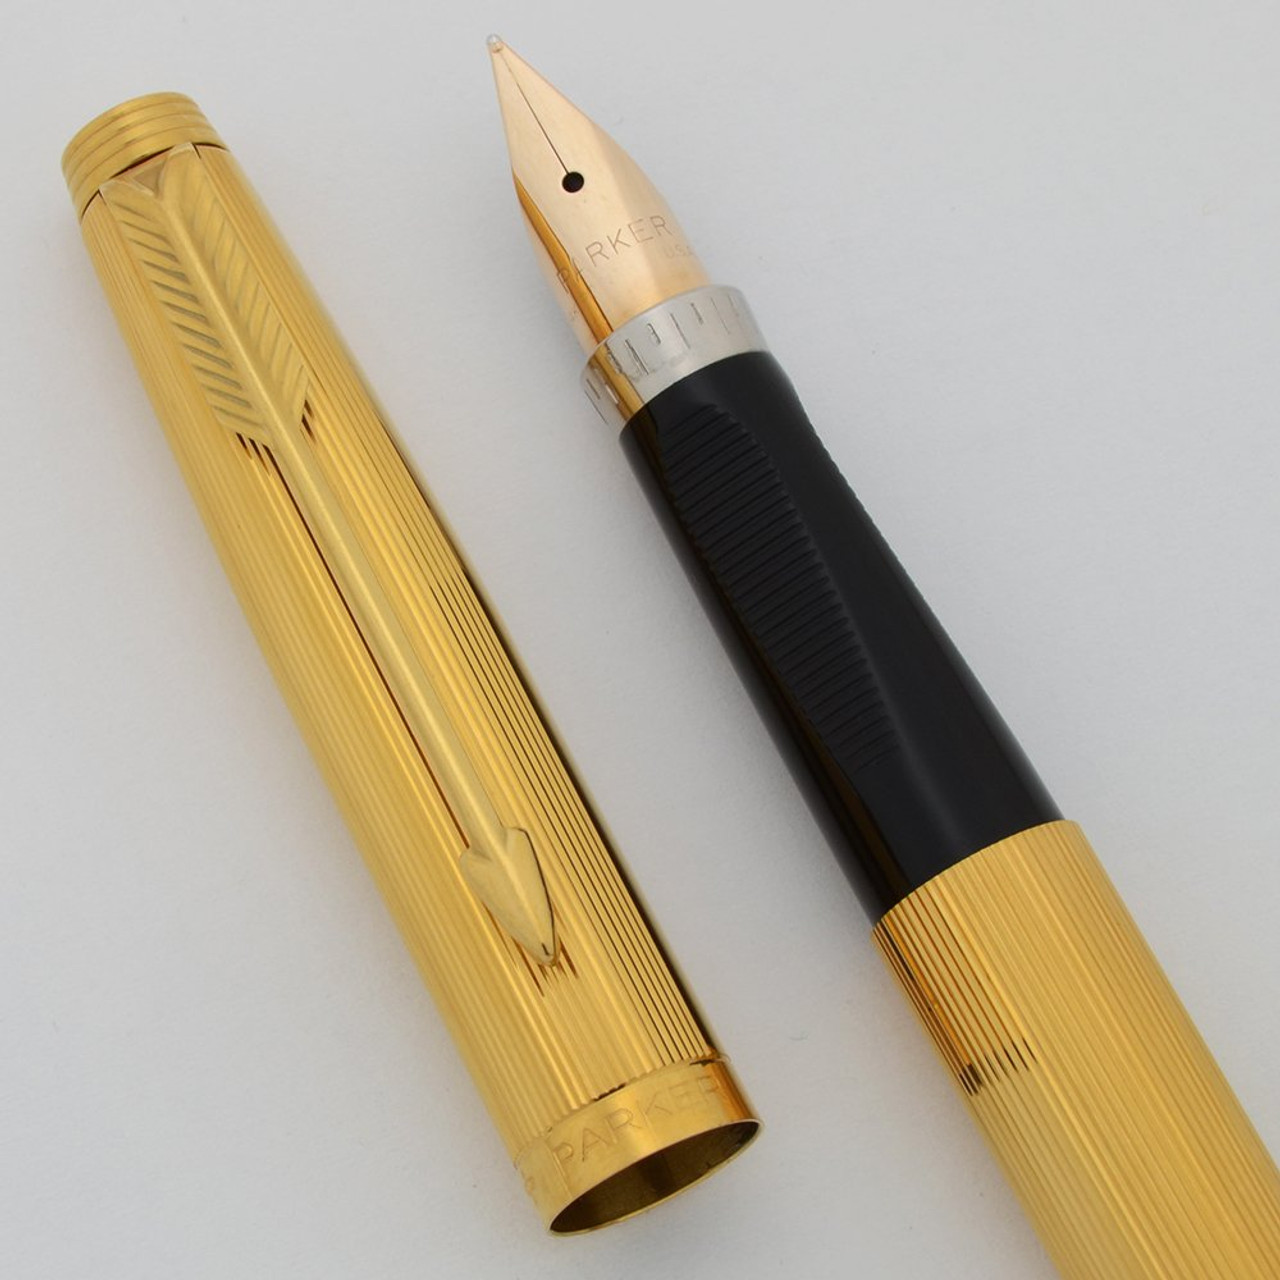 Parker 75 Fountain Pen - "Milleraies" Gold Lined, Dish Tassie, Fine 14k (Superior, Works Well)